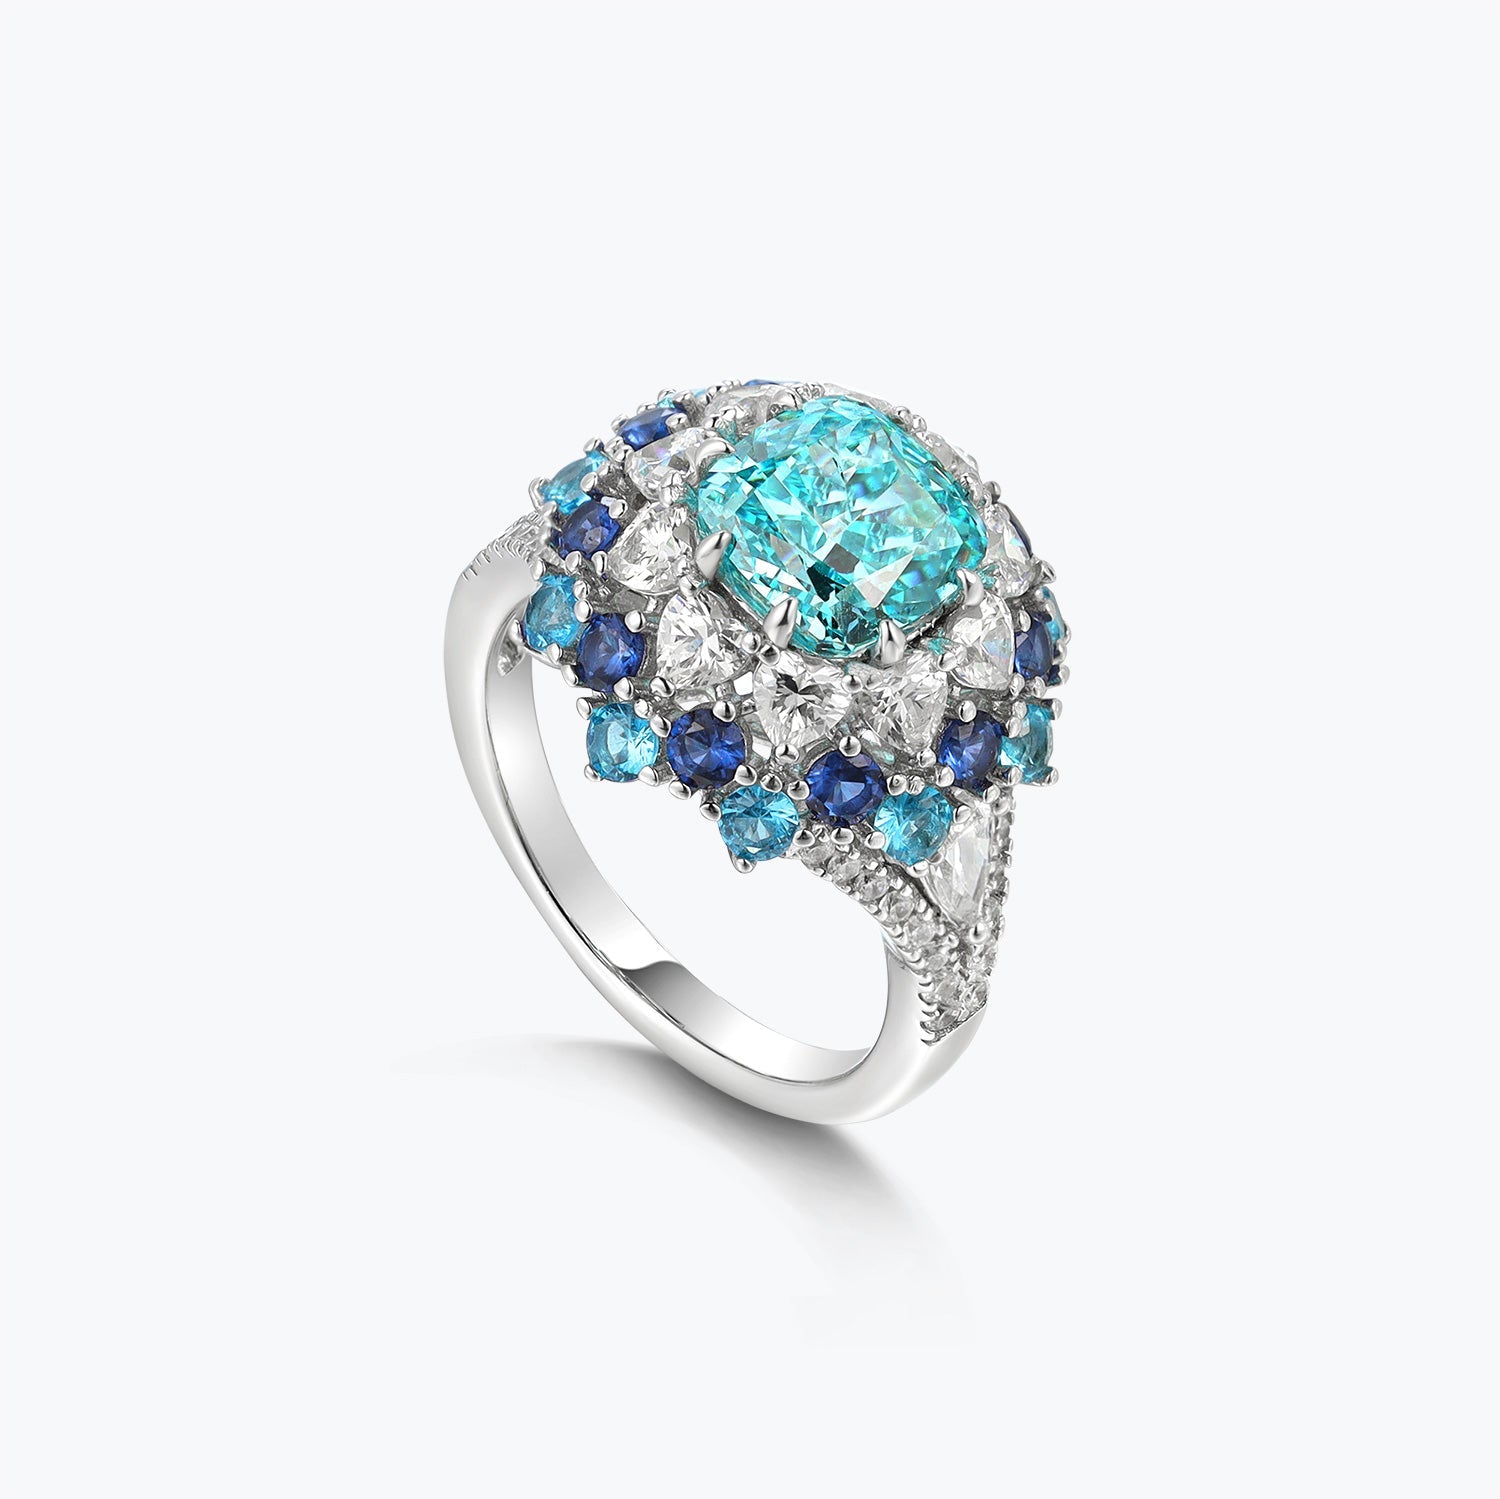 Blue & Aqua Luxury Cluster Floral Ring - dissoojewelry